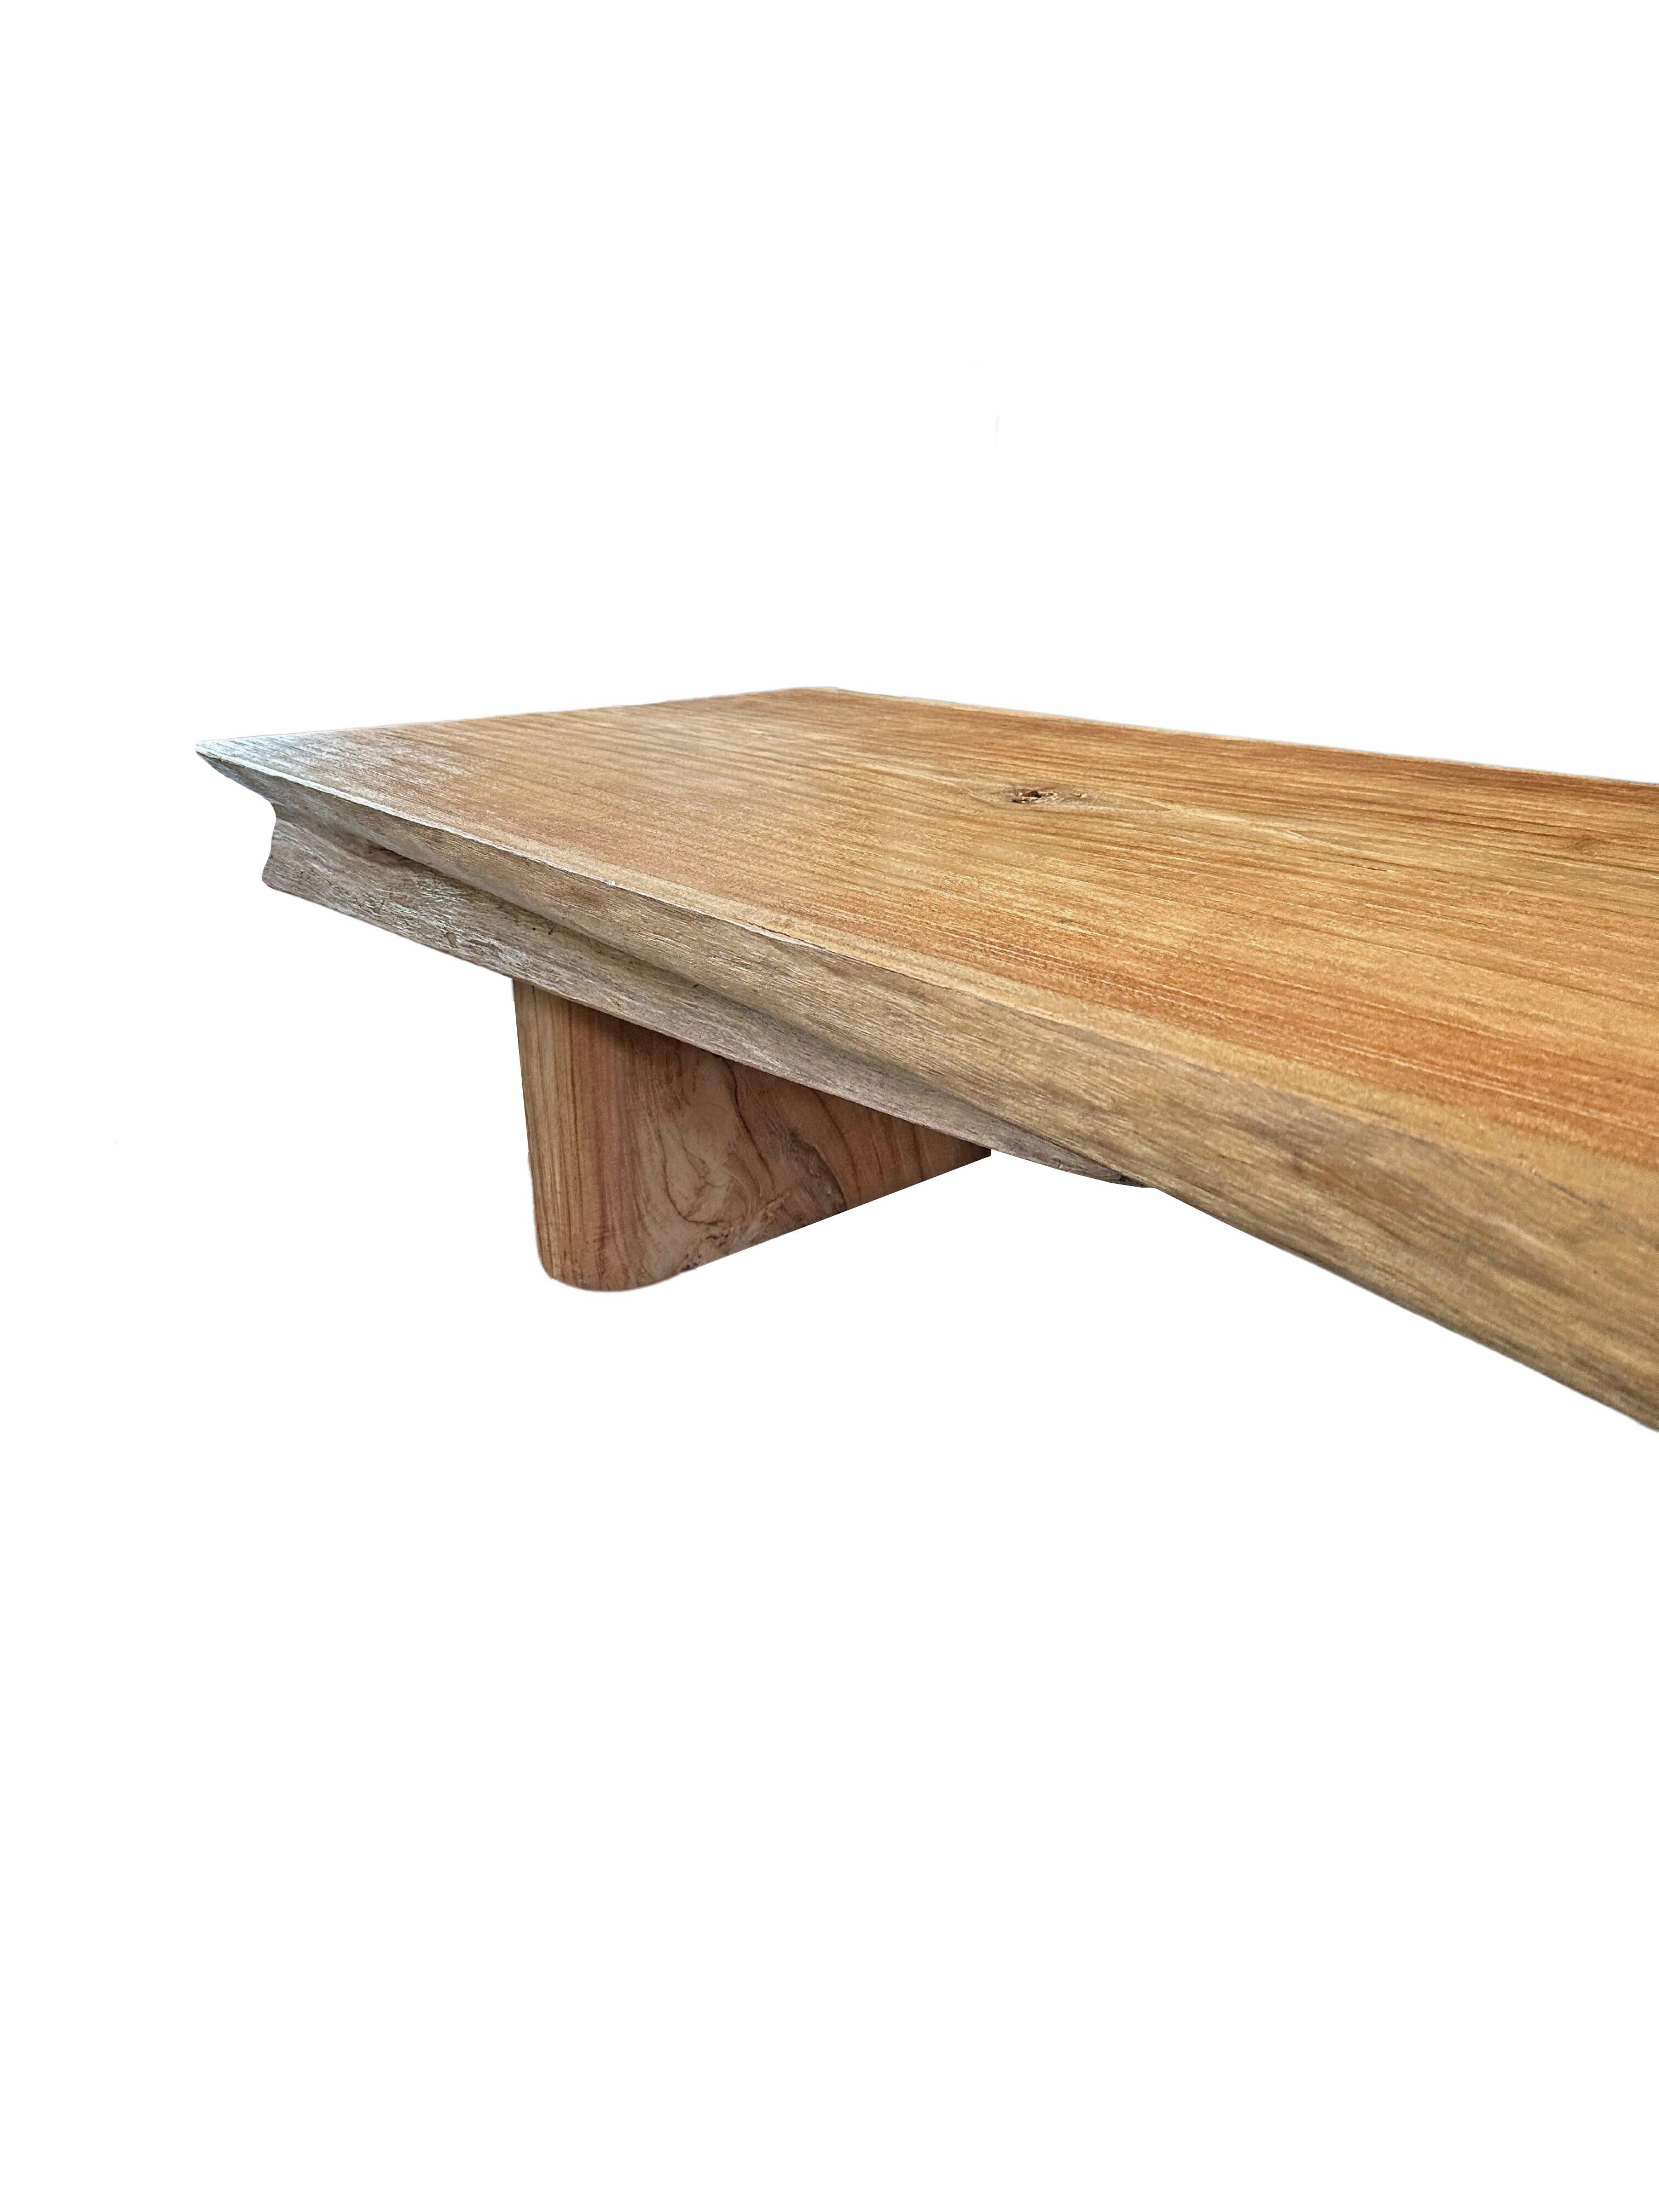 Solid Teak Wood Table Modern Organic In Good Condition For Sale In Jimbaran, Bali